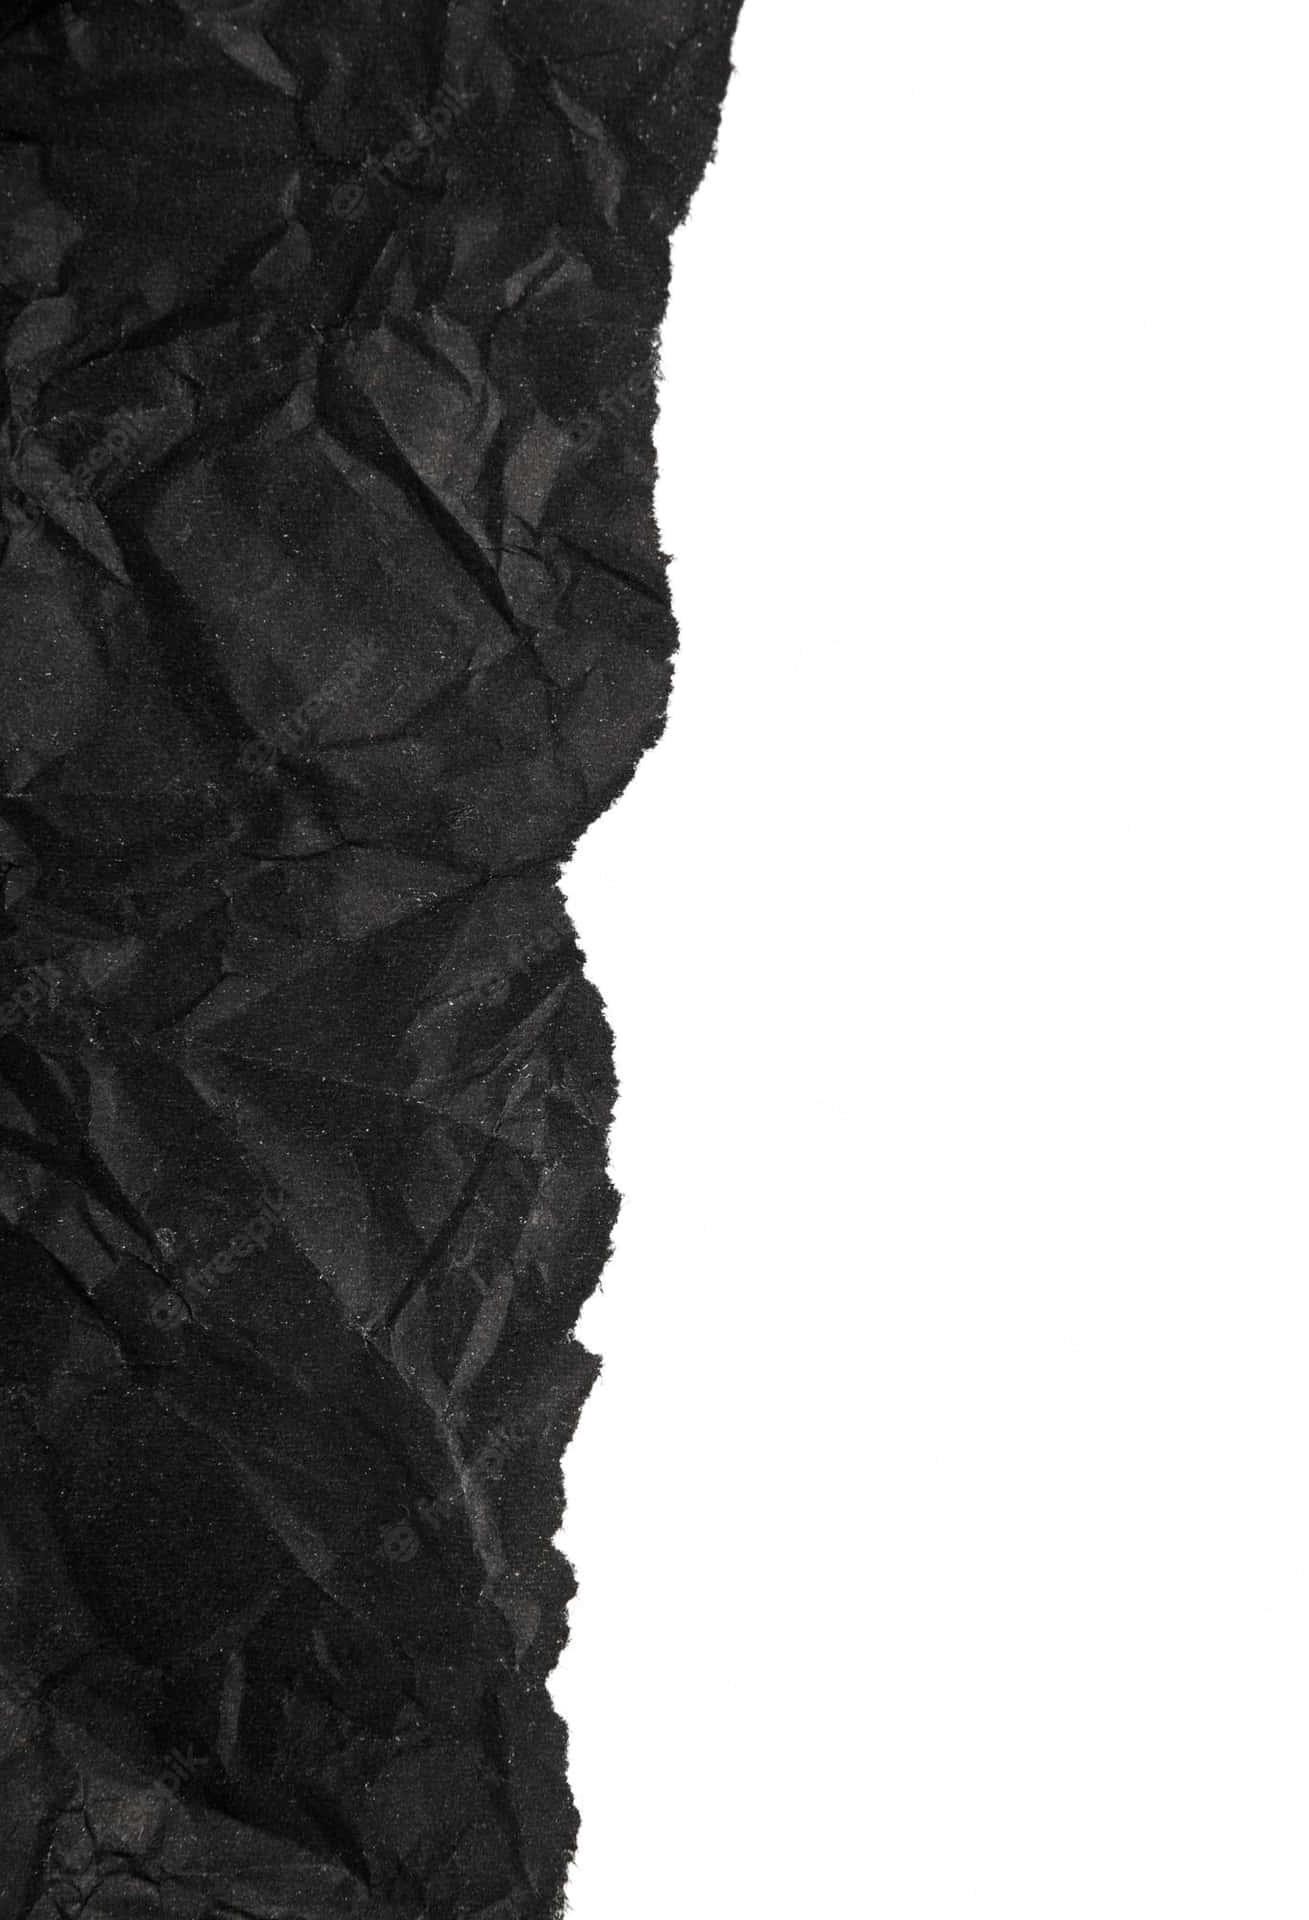 Vertical Black Crumpled Torn Paper Wallpaper